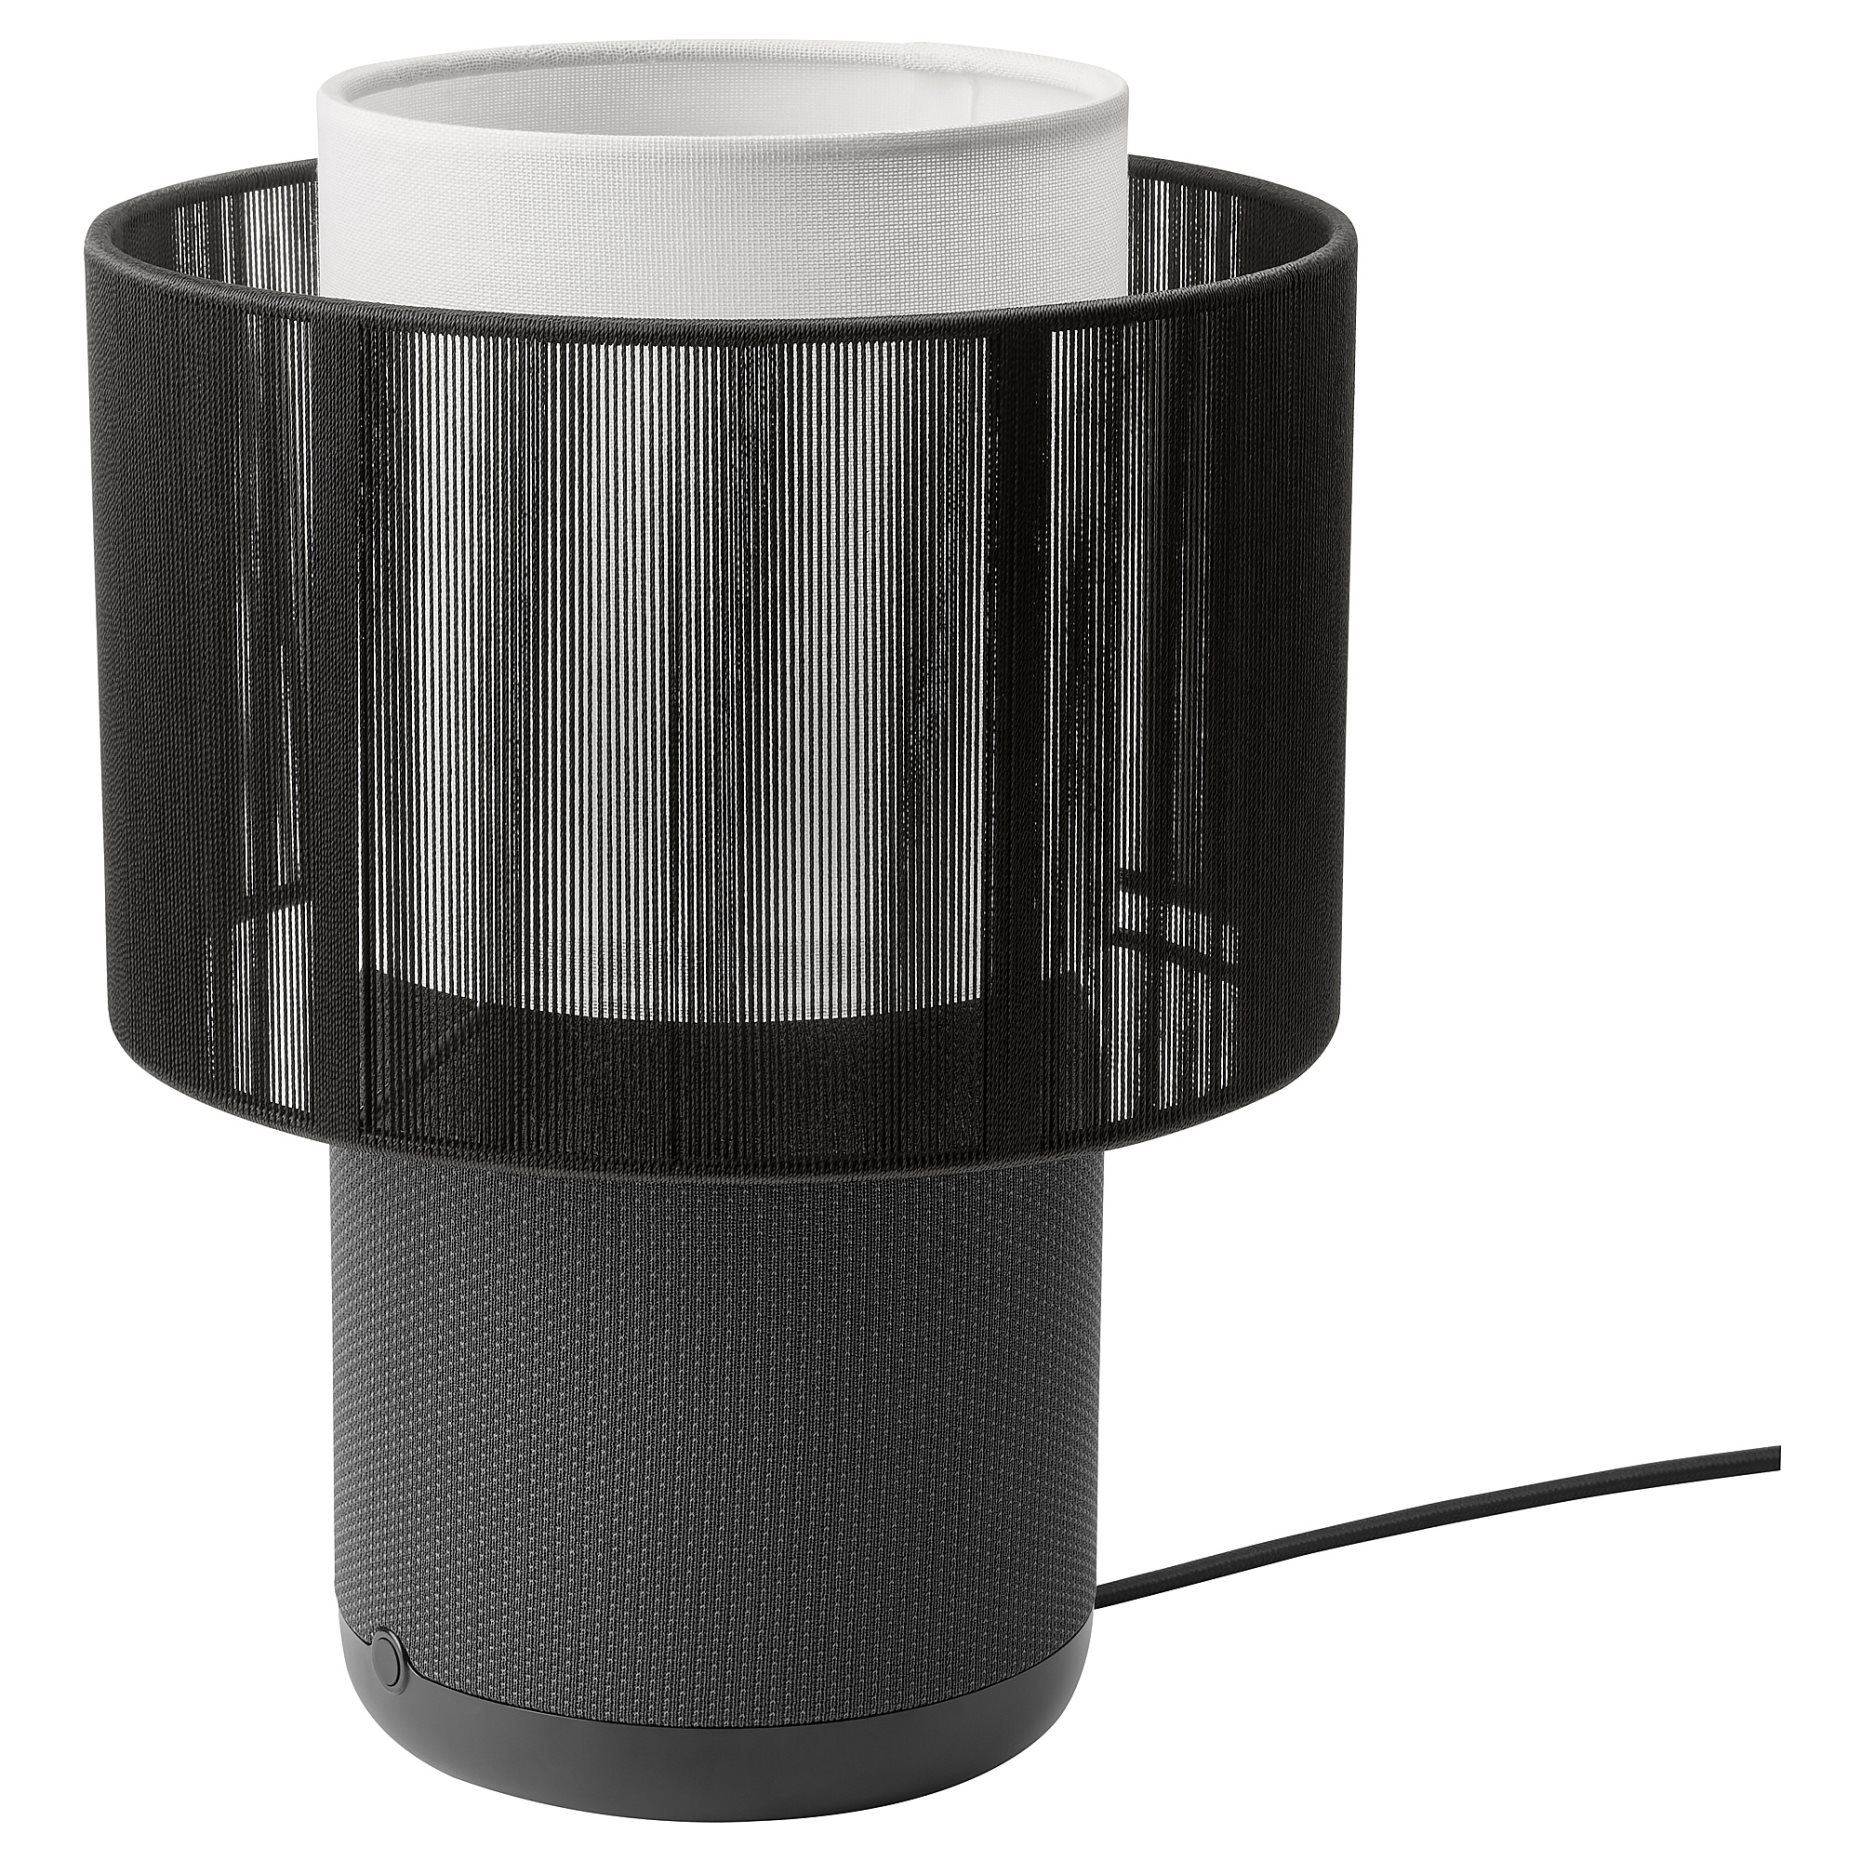 SYMFONISK, speaker lamp base with WiFi, 404.872.97